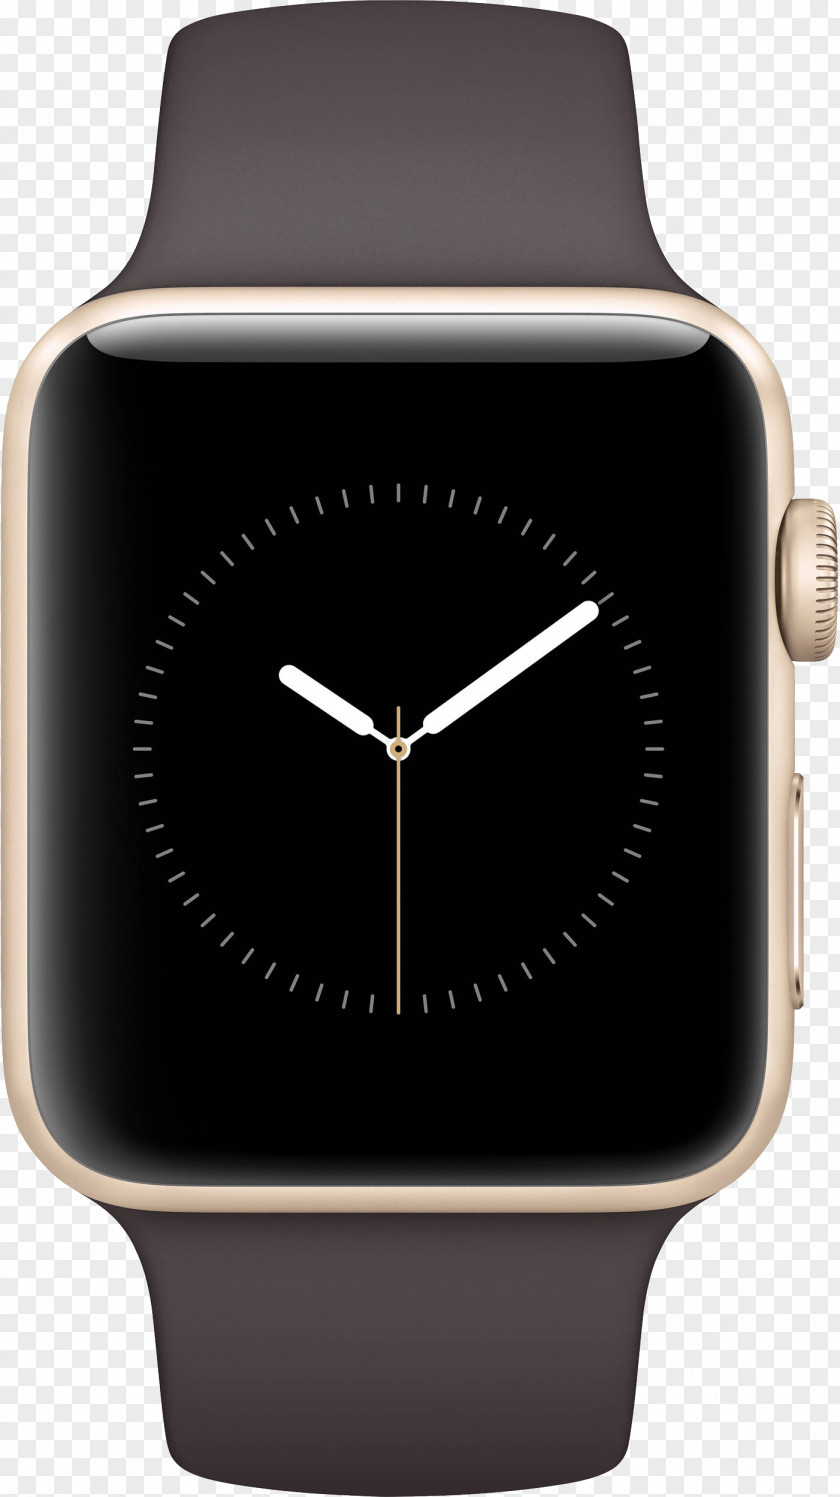 Aluminum Apple Watch Series 2 3 1 PNG